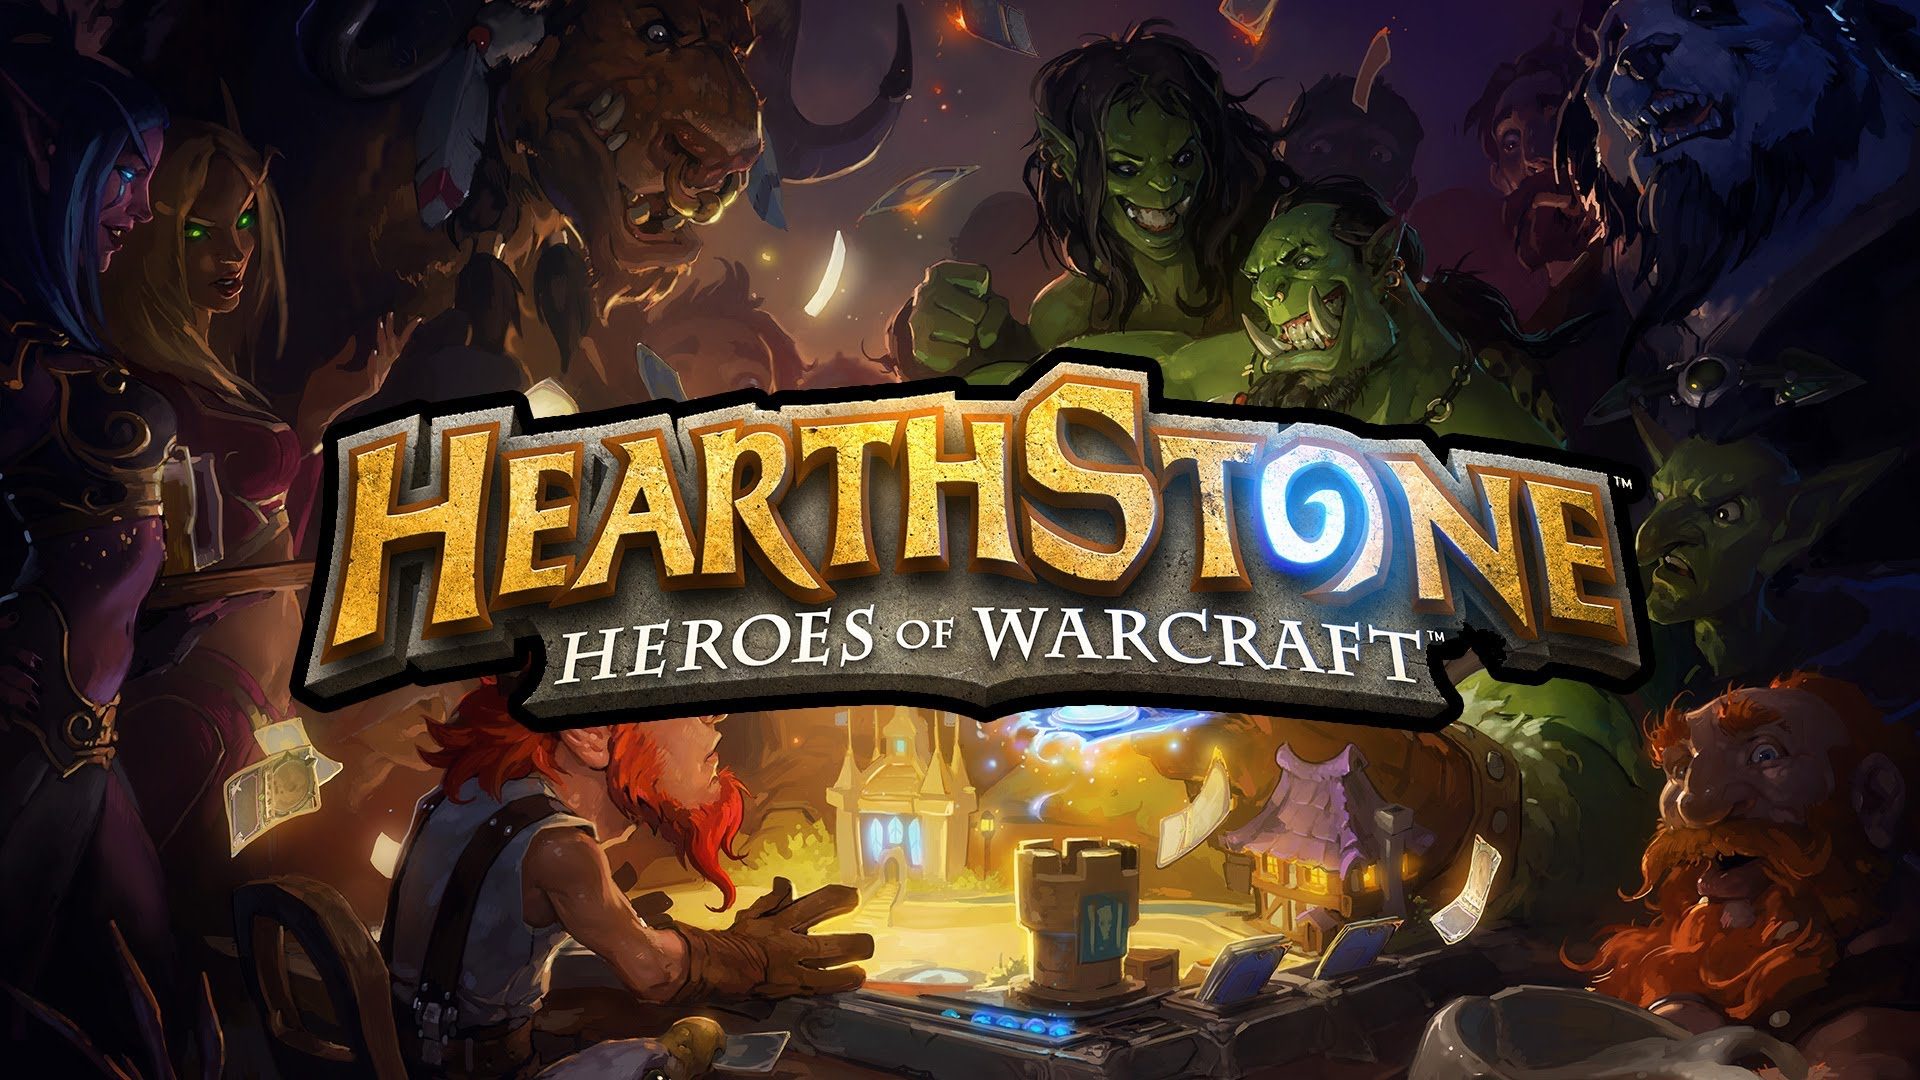 Hearthstone : Heroes of Warcraft